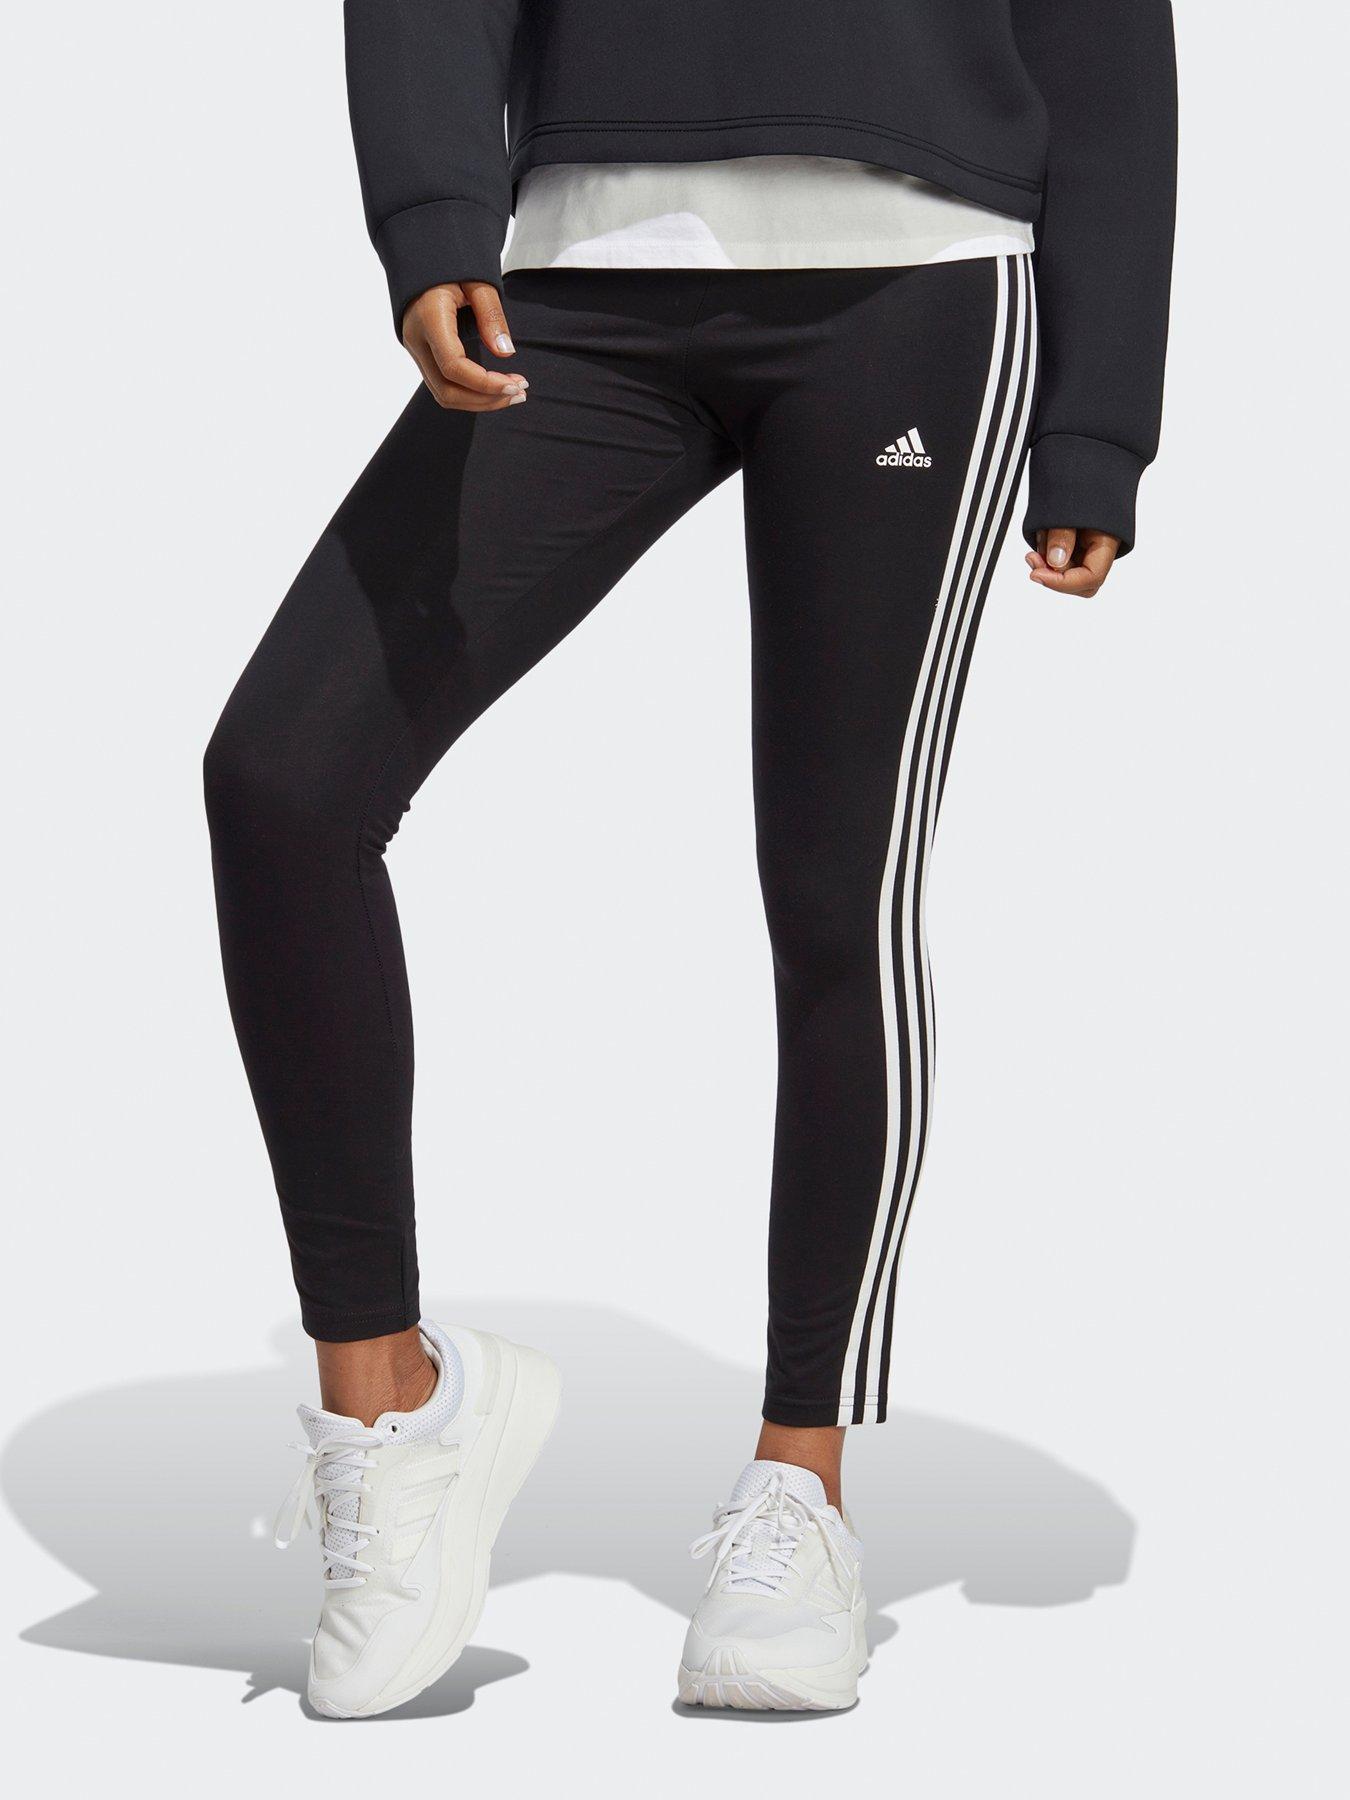 Adidas Adidas, Women's Black & White Leggings, Size Medium, 0742